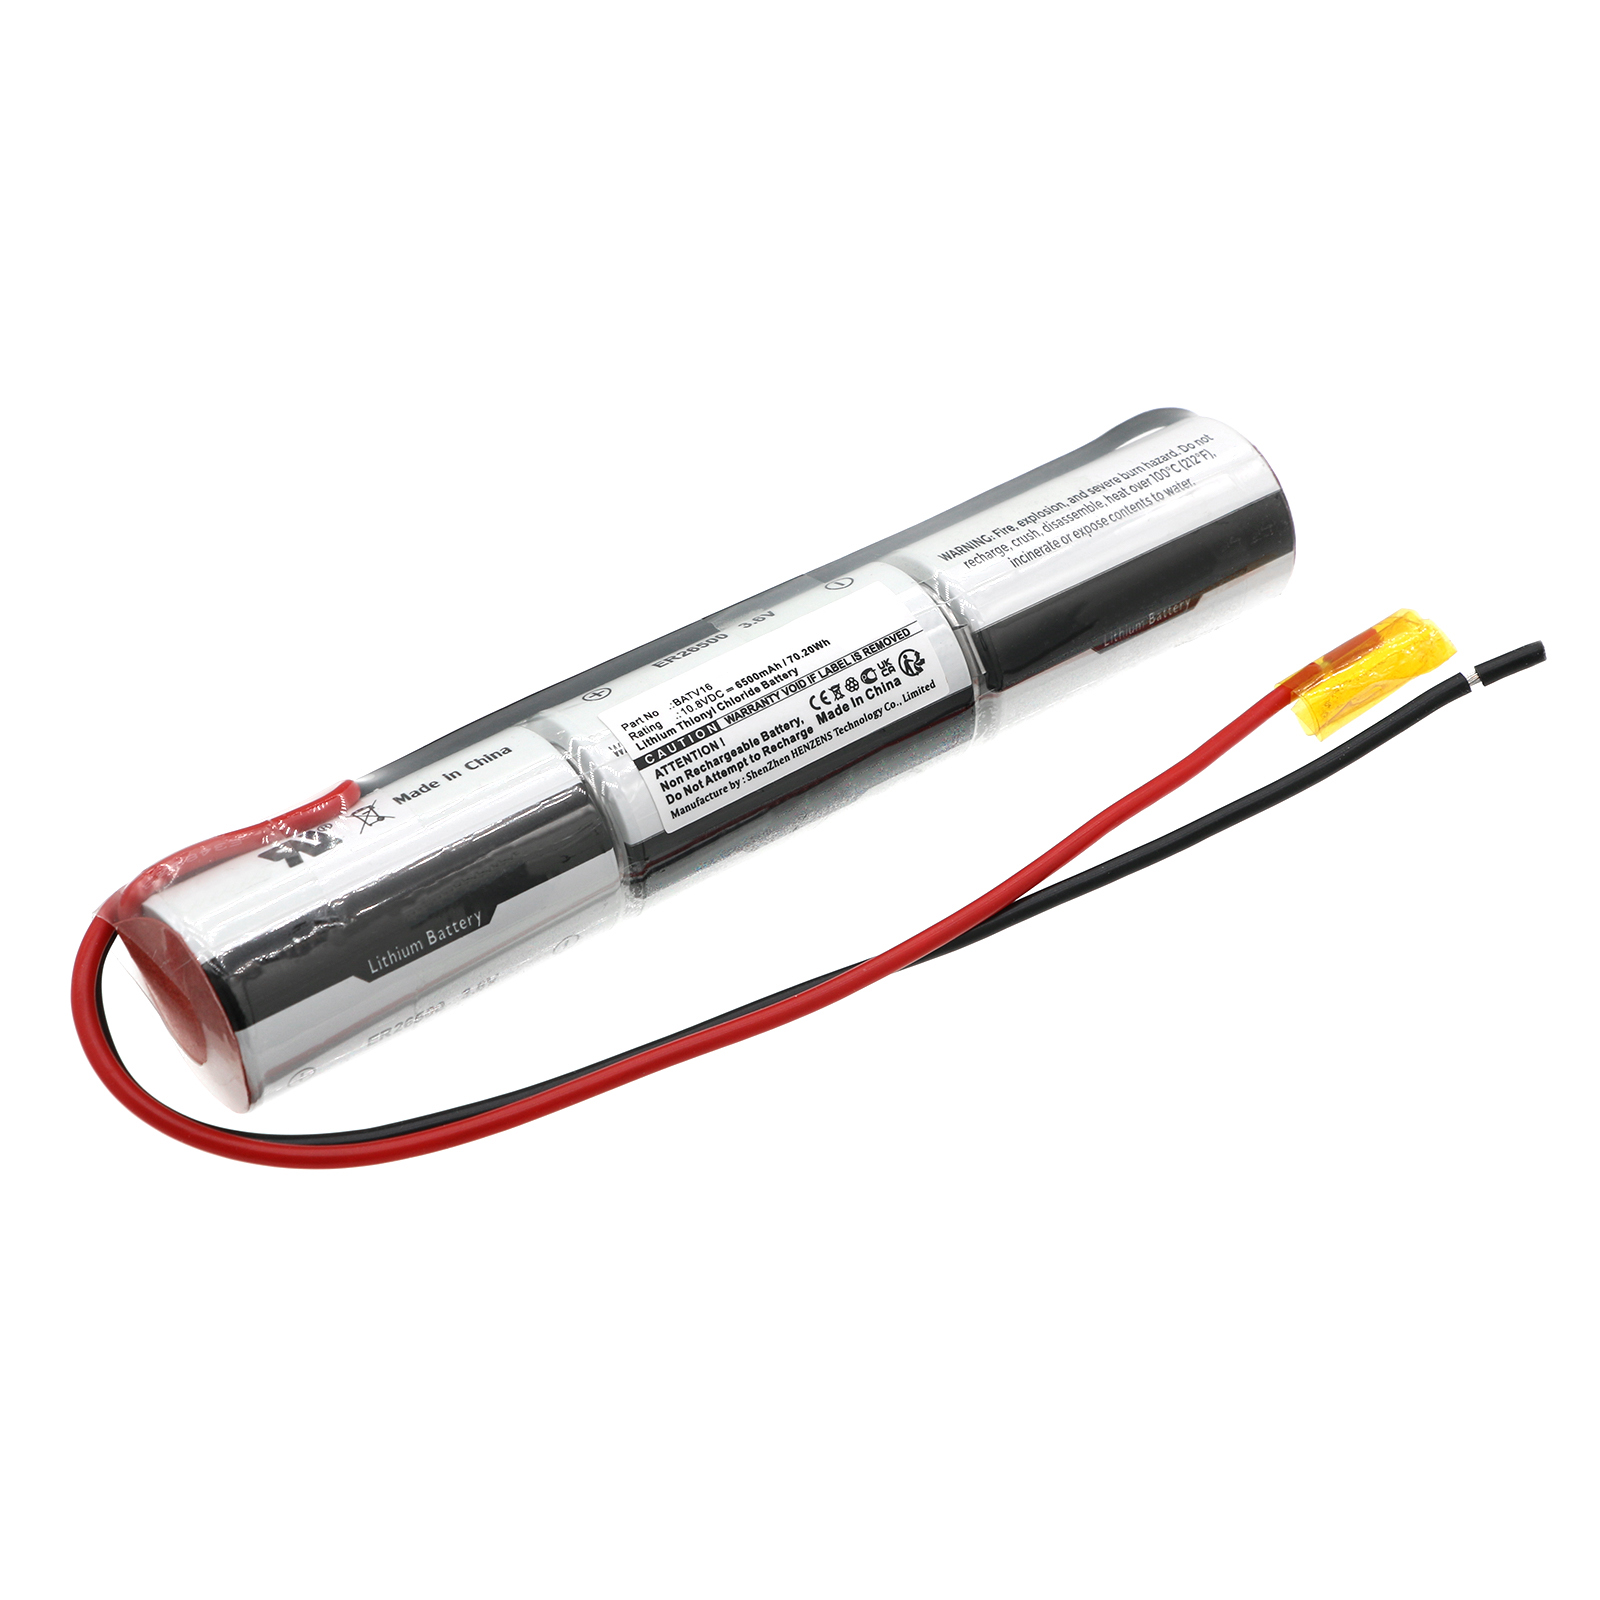 Synergy Digital Alarm System Battery, Compatible with DAITEM BATV16 Alarm System Battery (Li-SOCl2, 10.8V, 6500mAh)